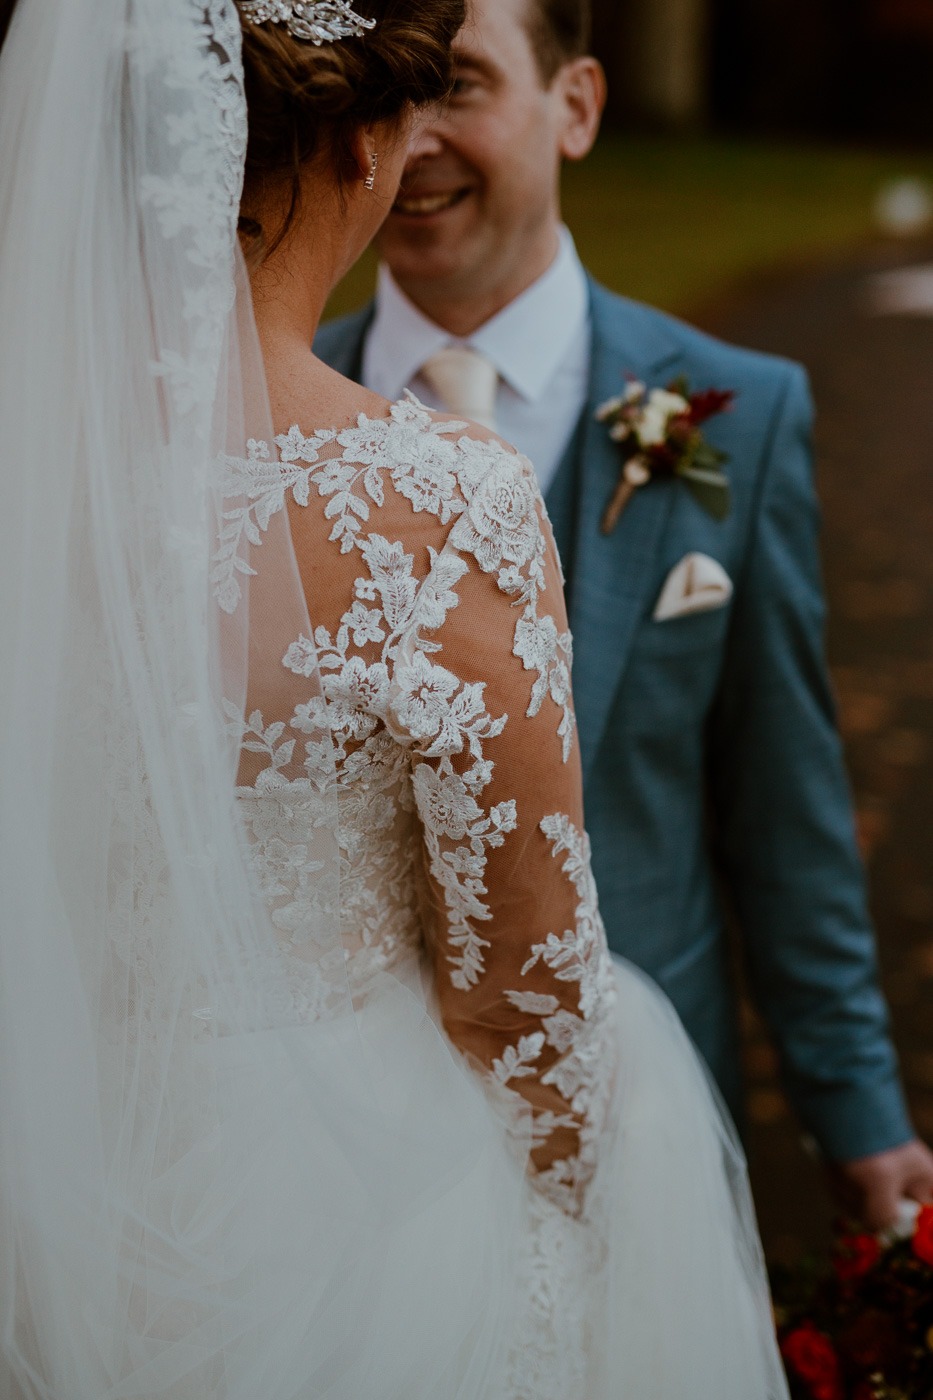 A person wearing a wedding dress